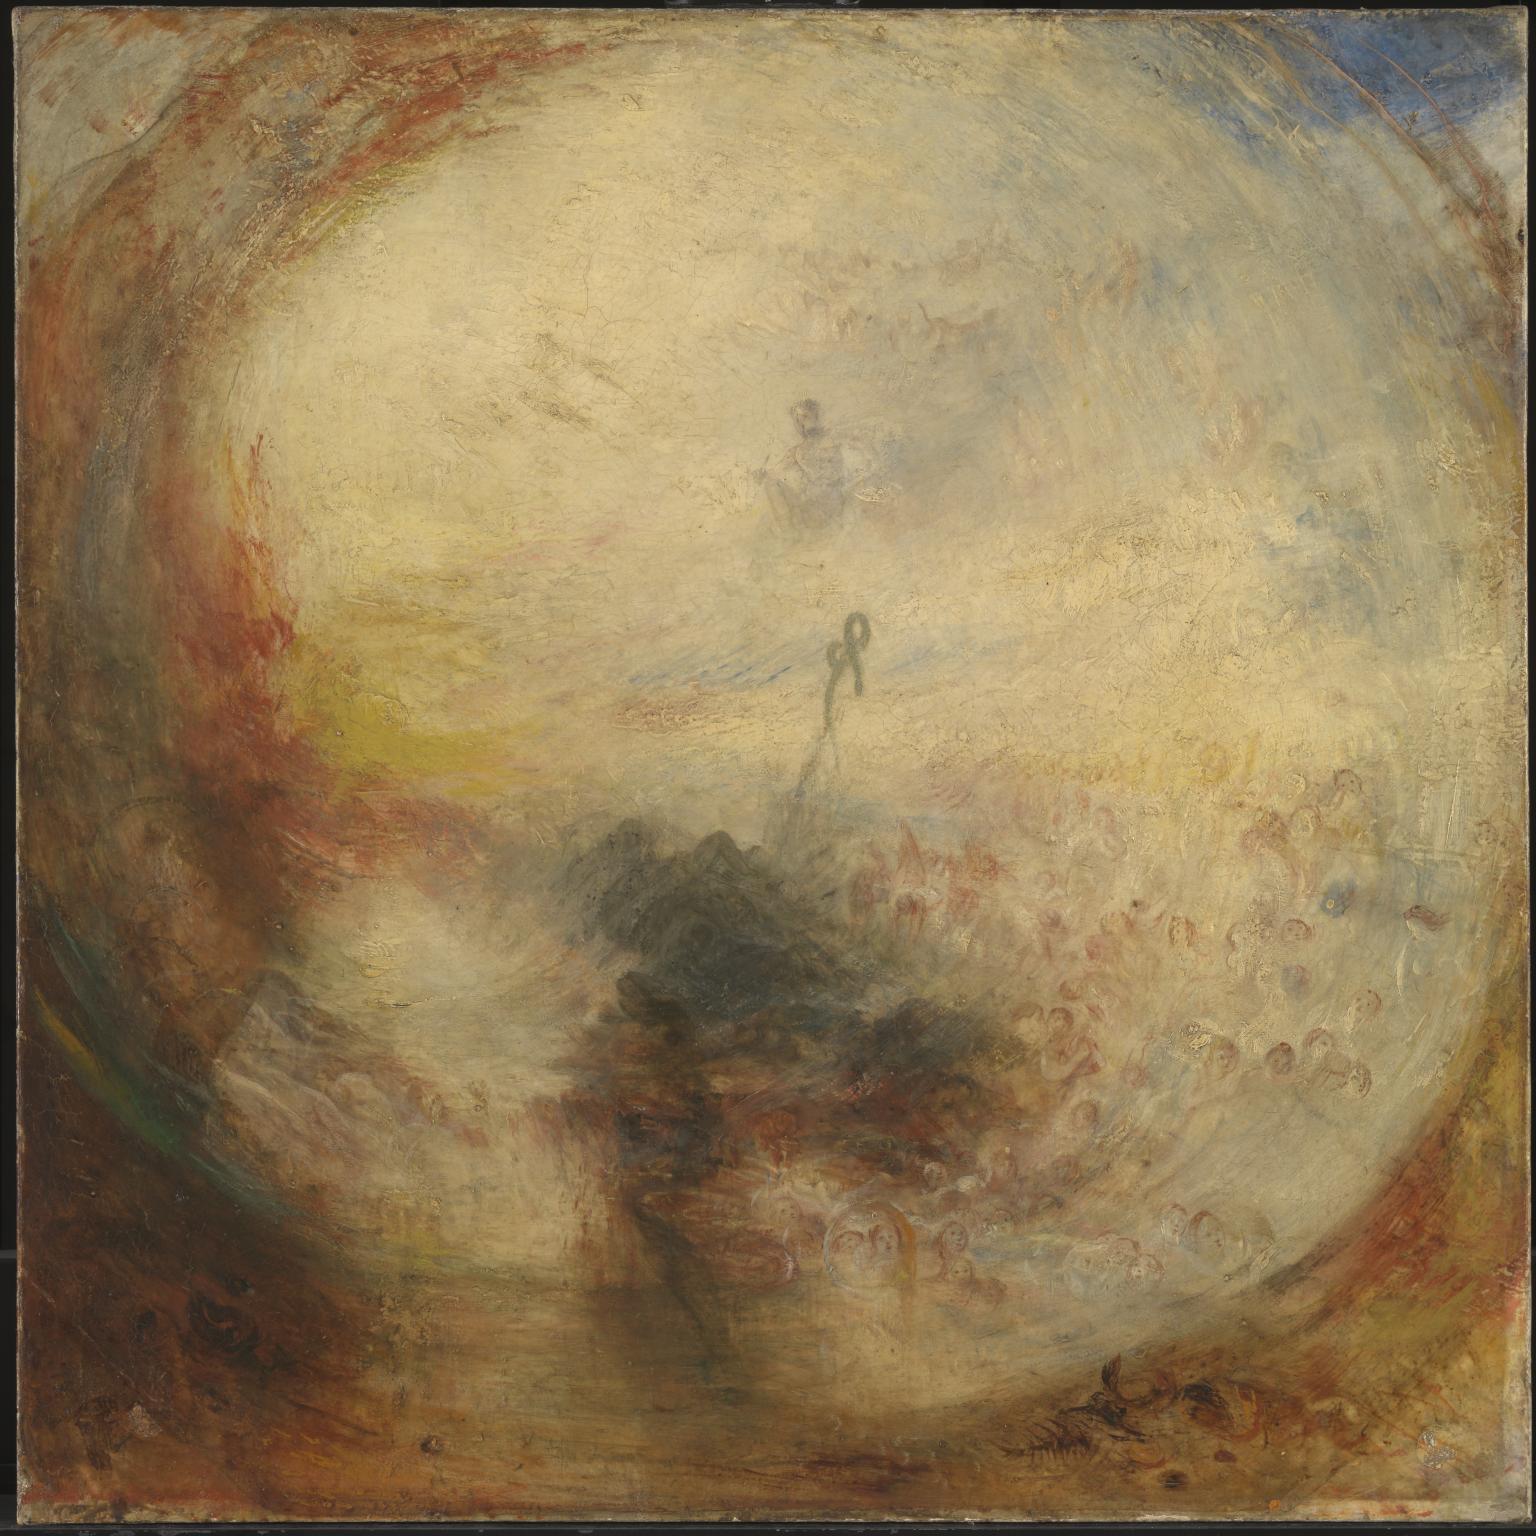 Światło i Kolor by Joseph Mallord William Turner - 1843 - 787 x 787 cm 